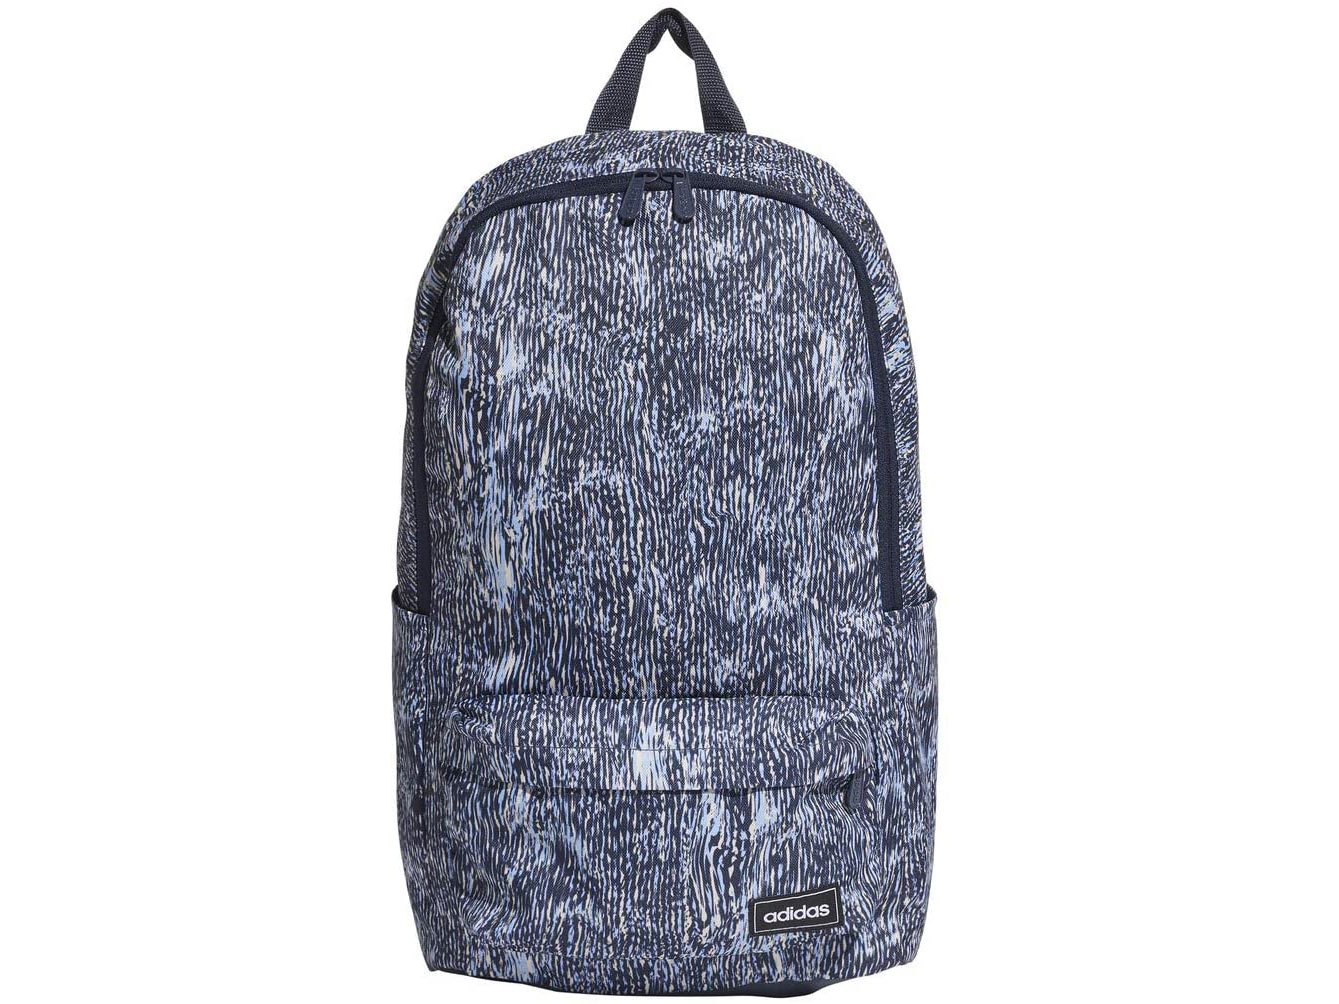 Amazon：Adidas Classic Backpack只賣$18.36